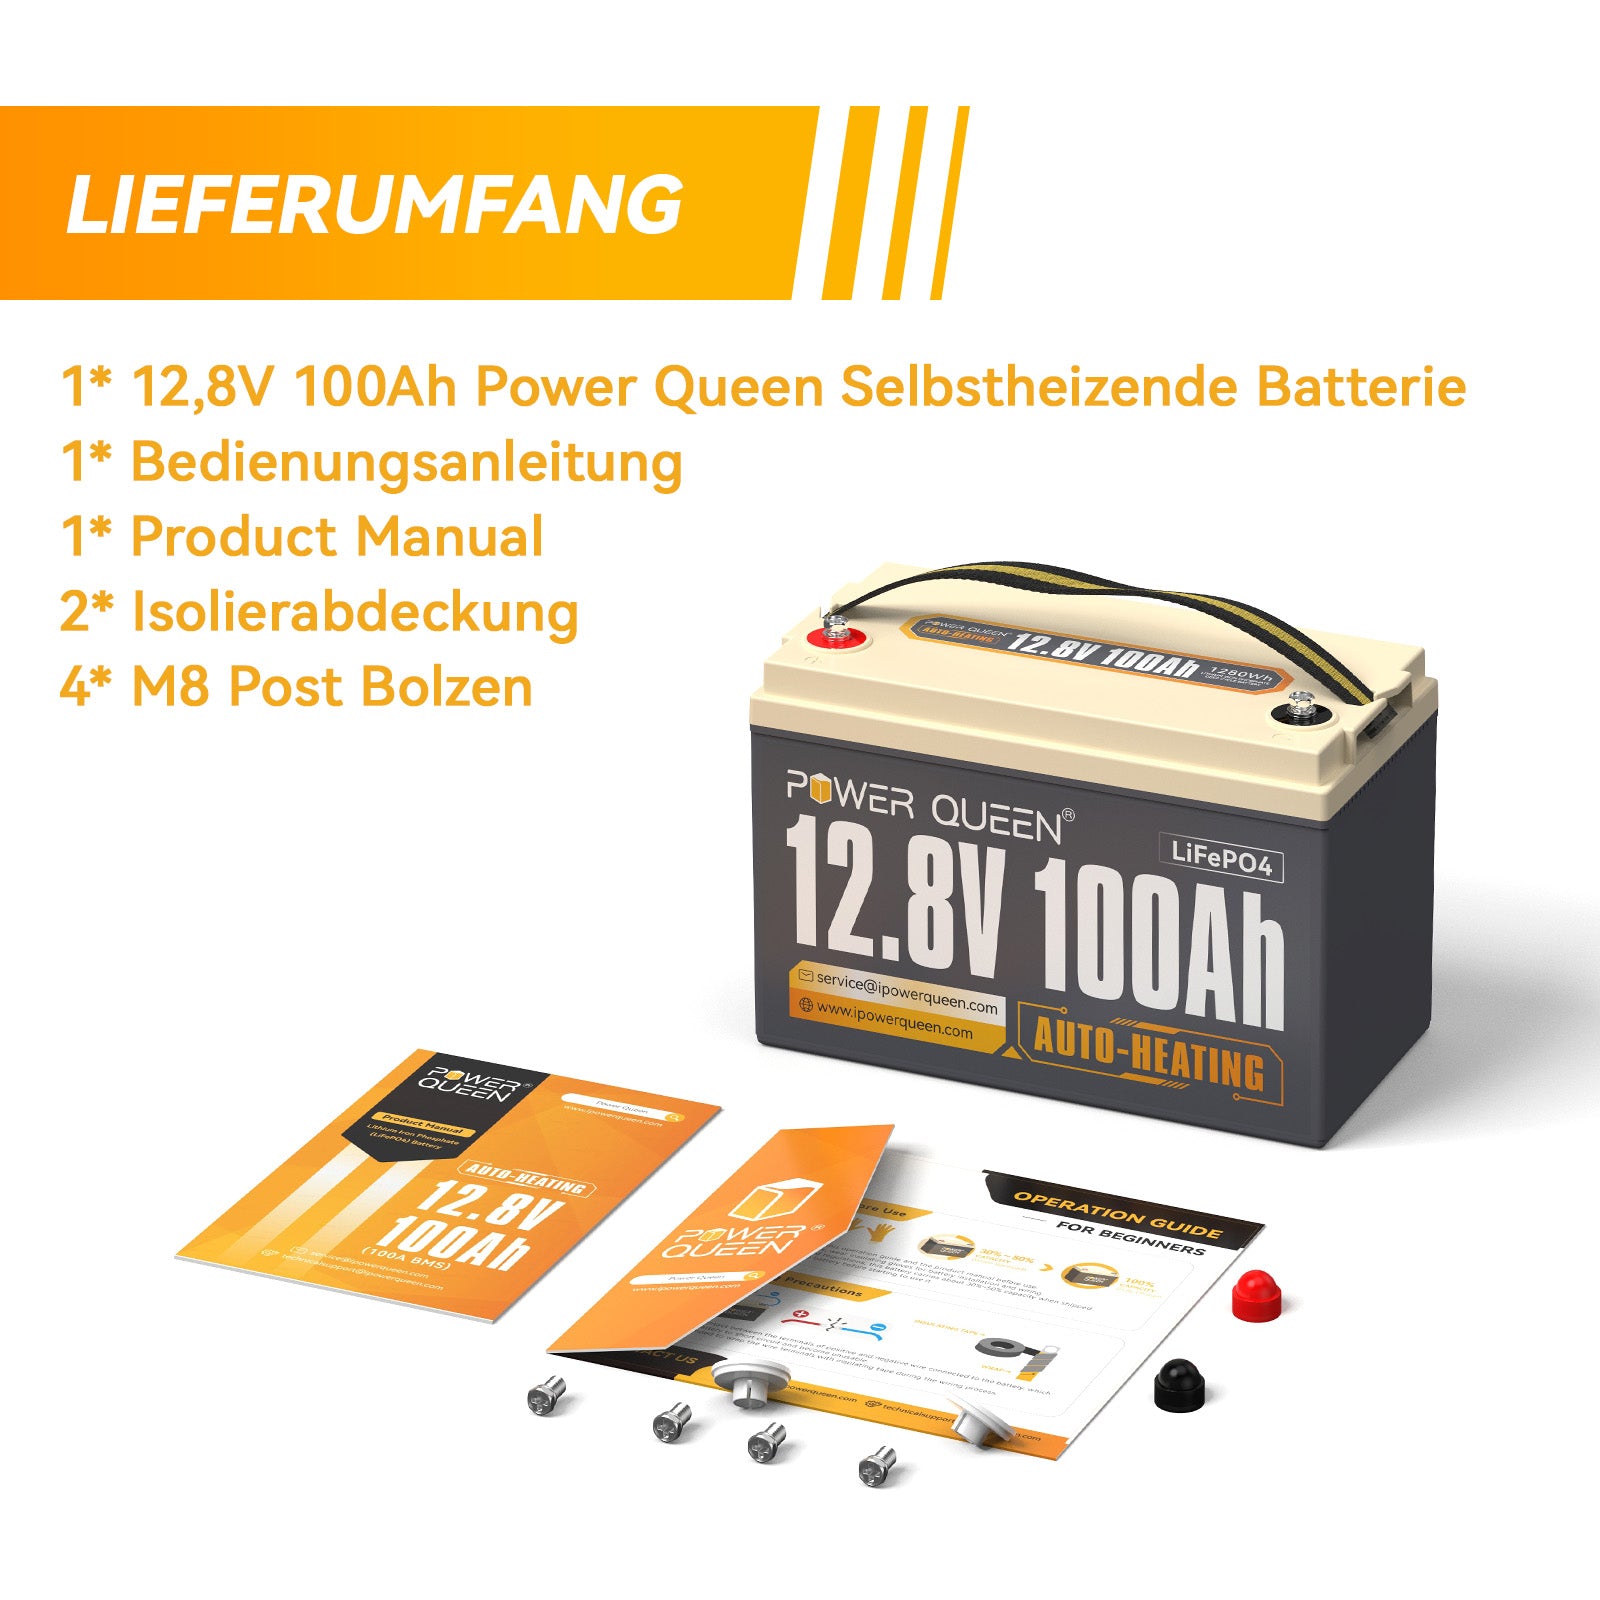 【TVA 0%】 Batterie LiFePO4 auto-chauffante Power Queen 12 V 100 Ah, BMS 100 A intégré